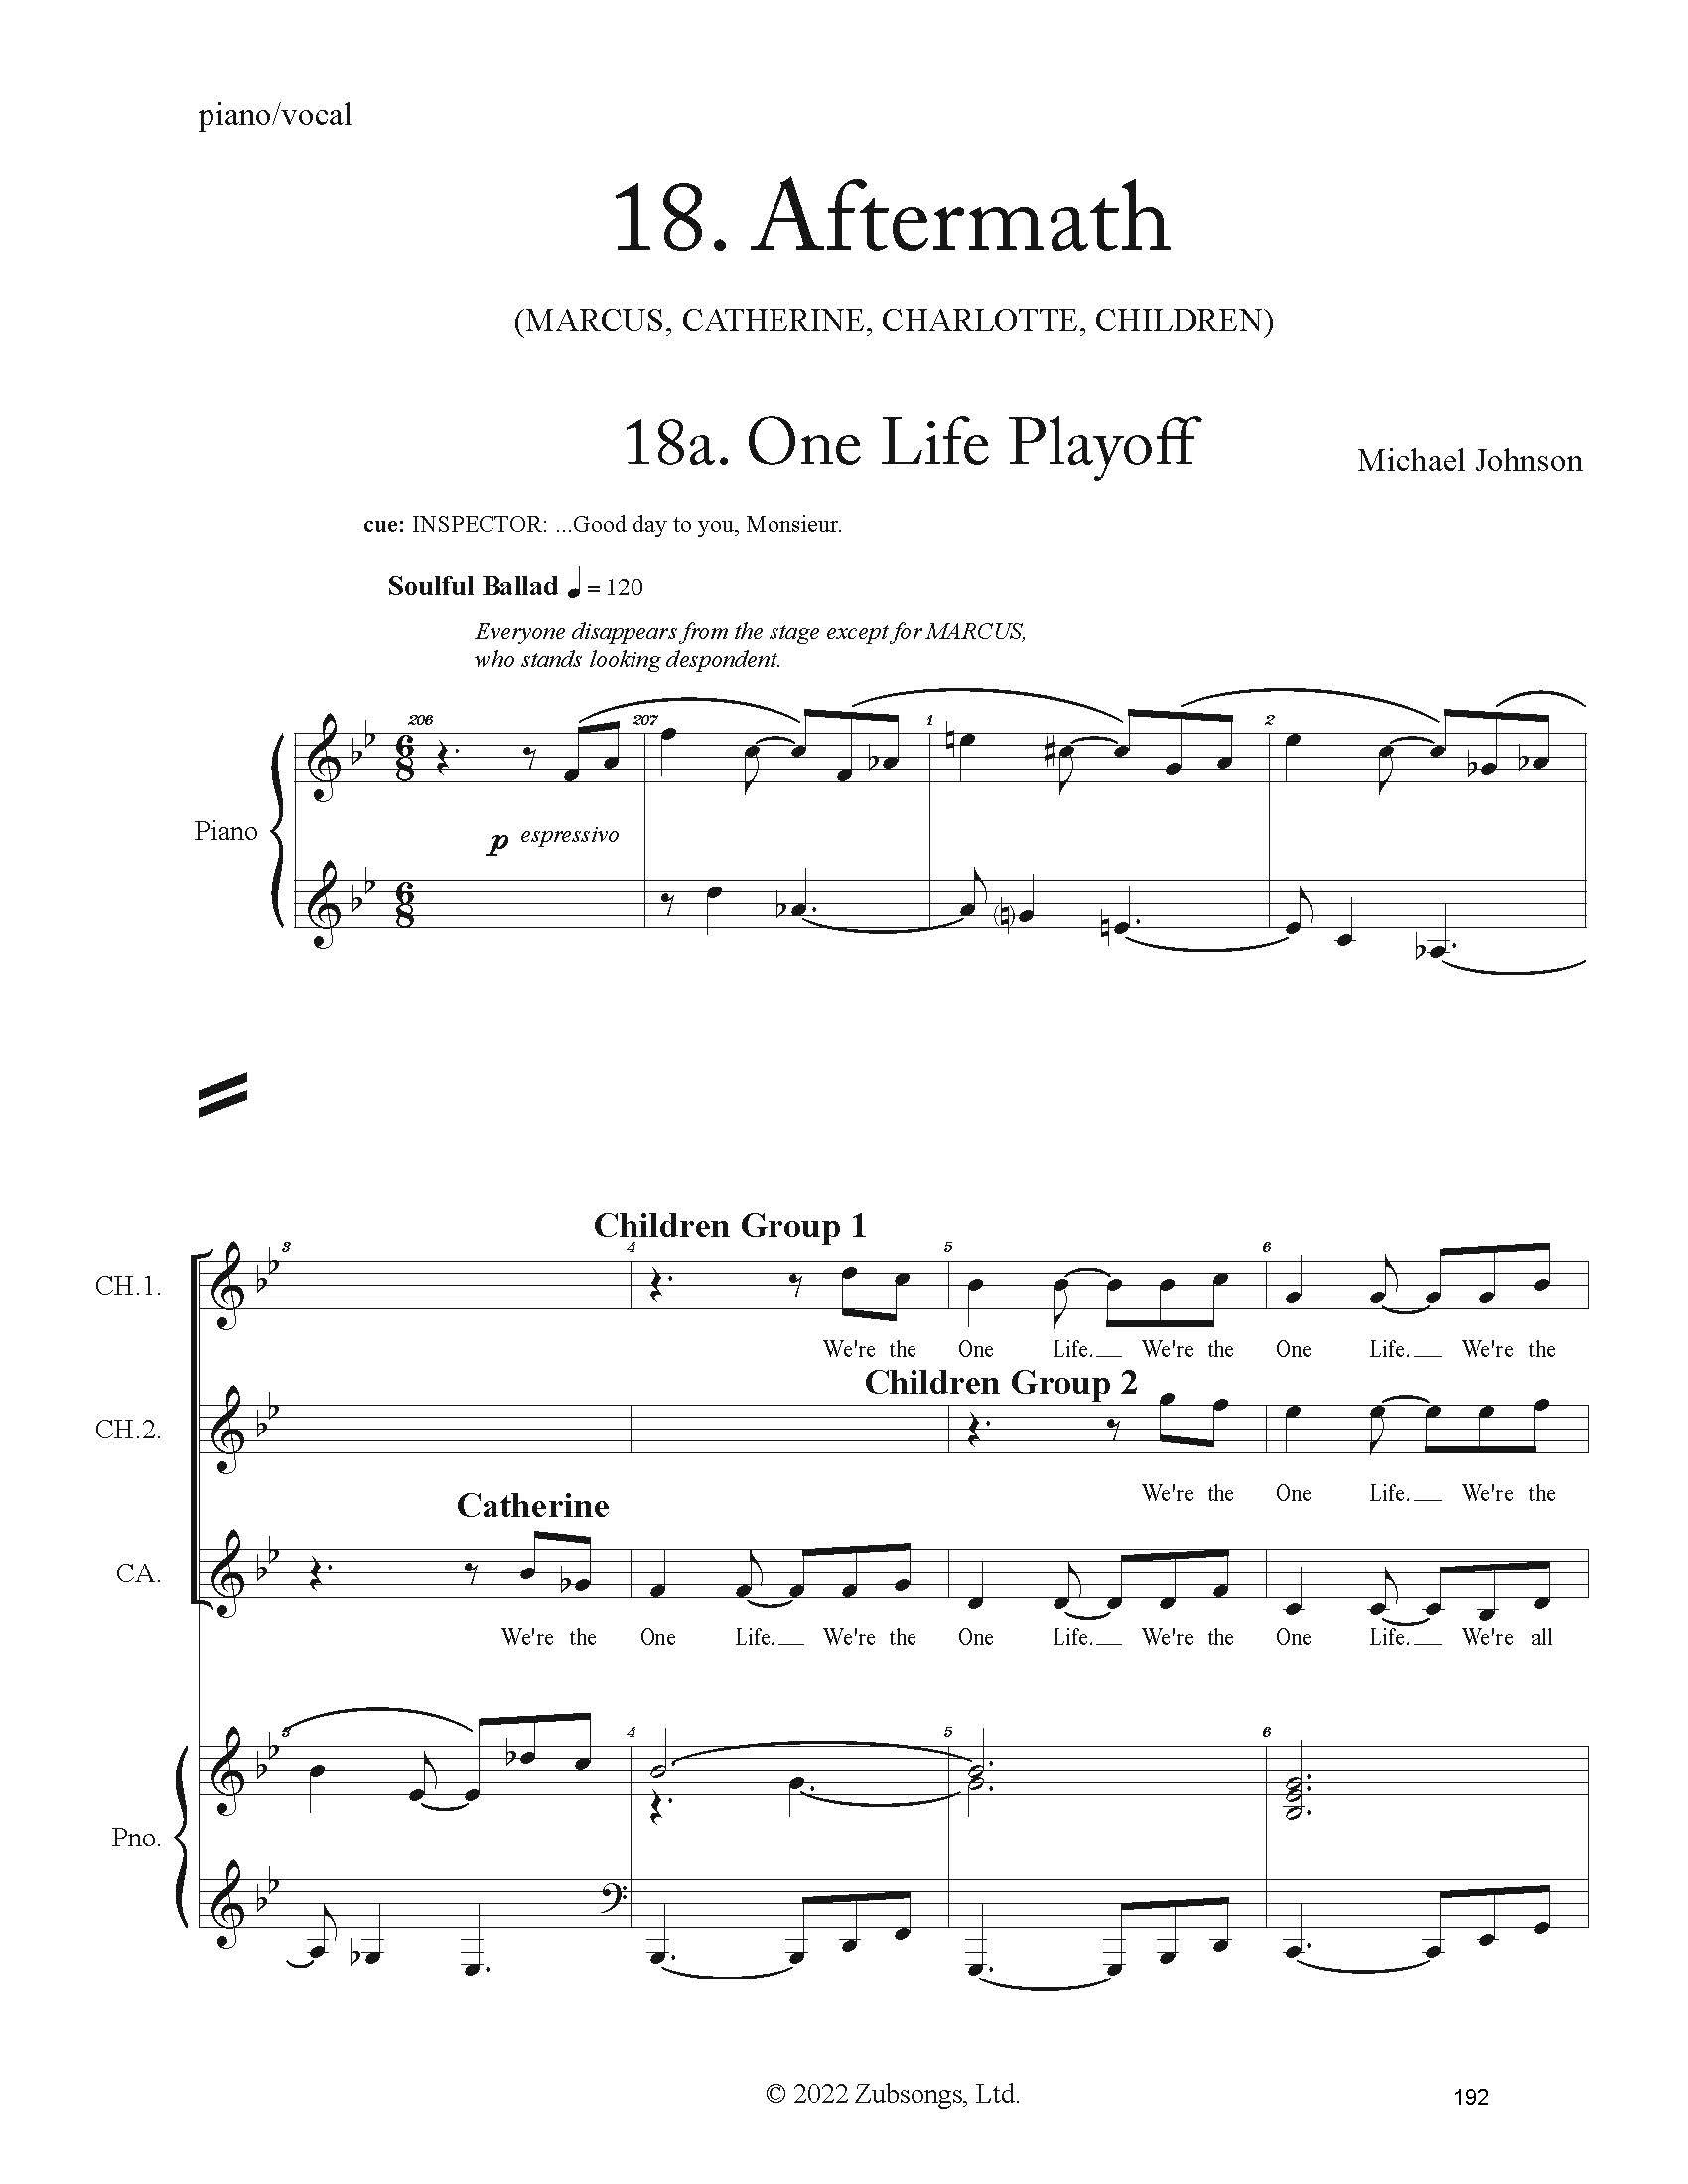 FULL PIANO VOCAL SCORE DRAFT 1 - Score_Page_192.jpg